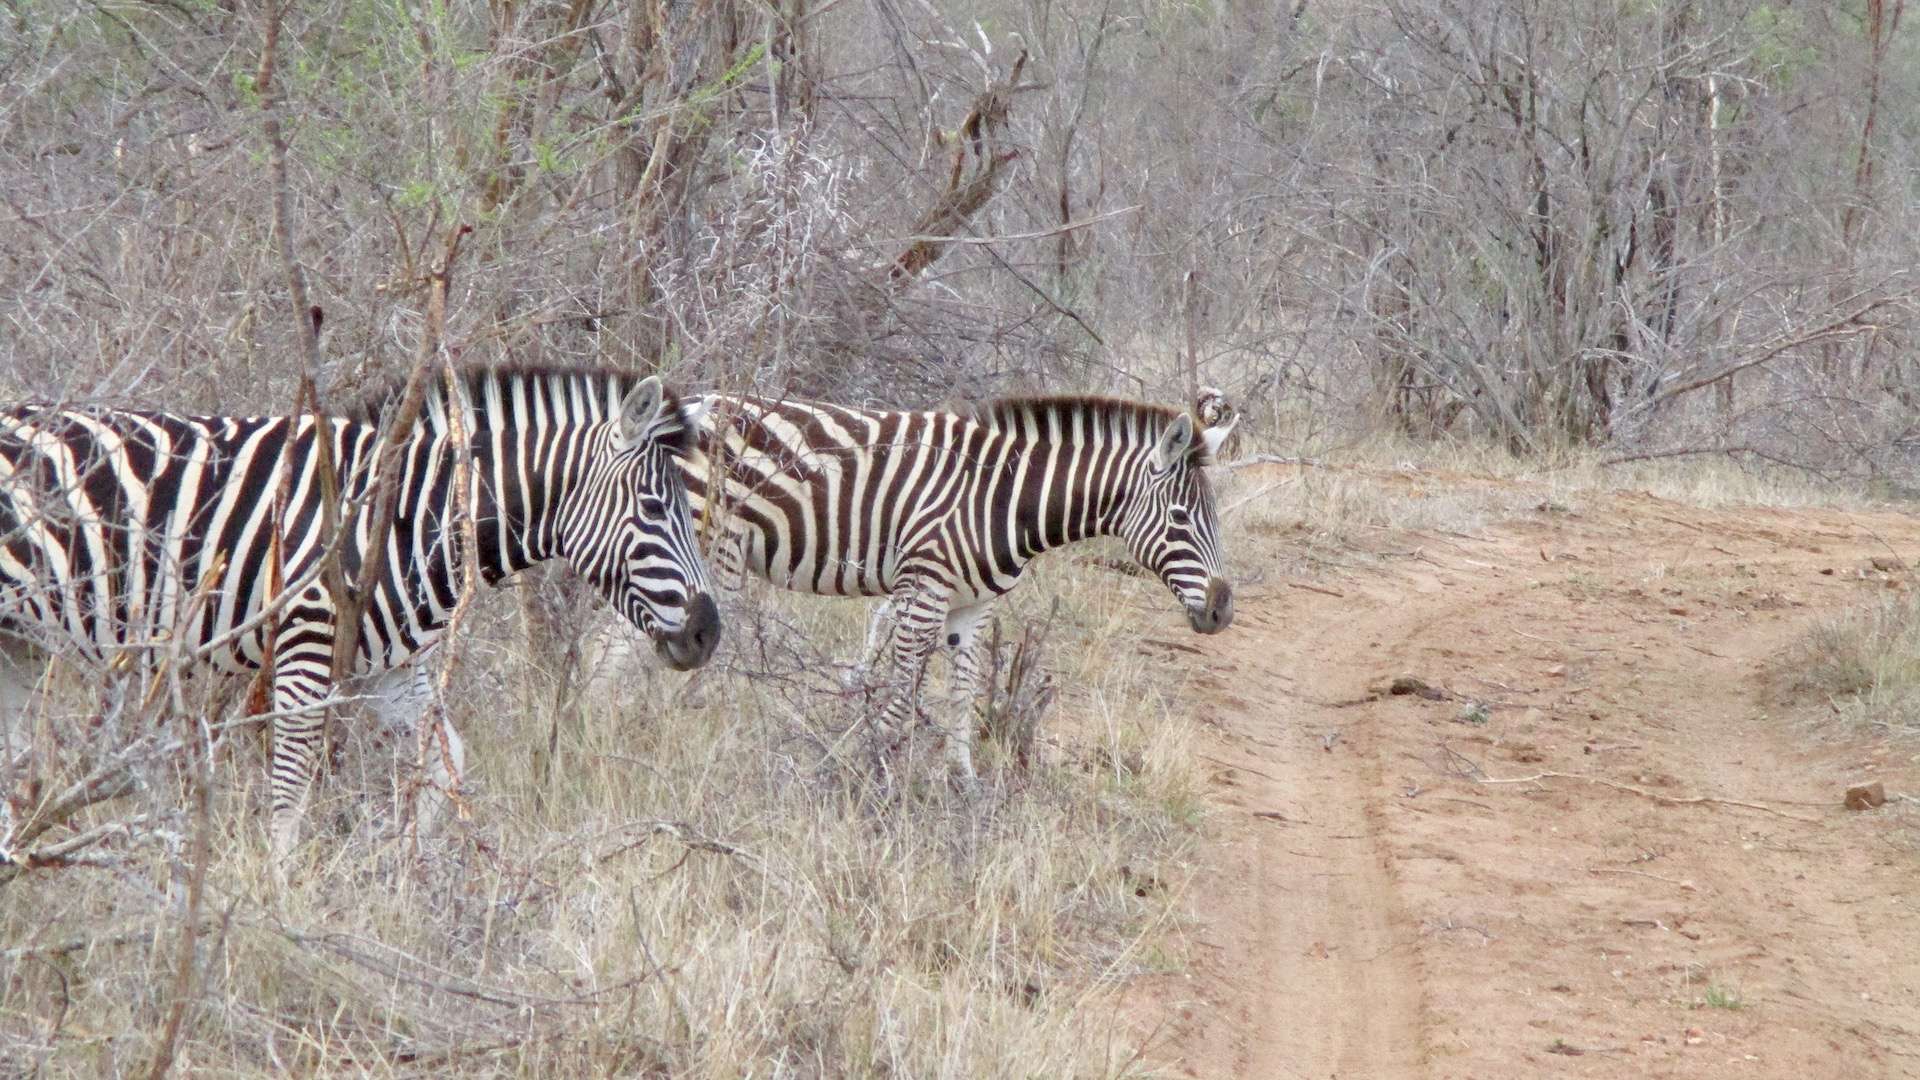 Dazzle of zebras photo taken by Robert Townshend, Total Advantage Travel